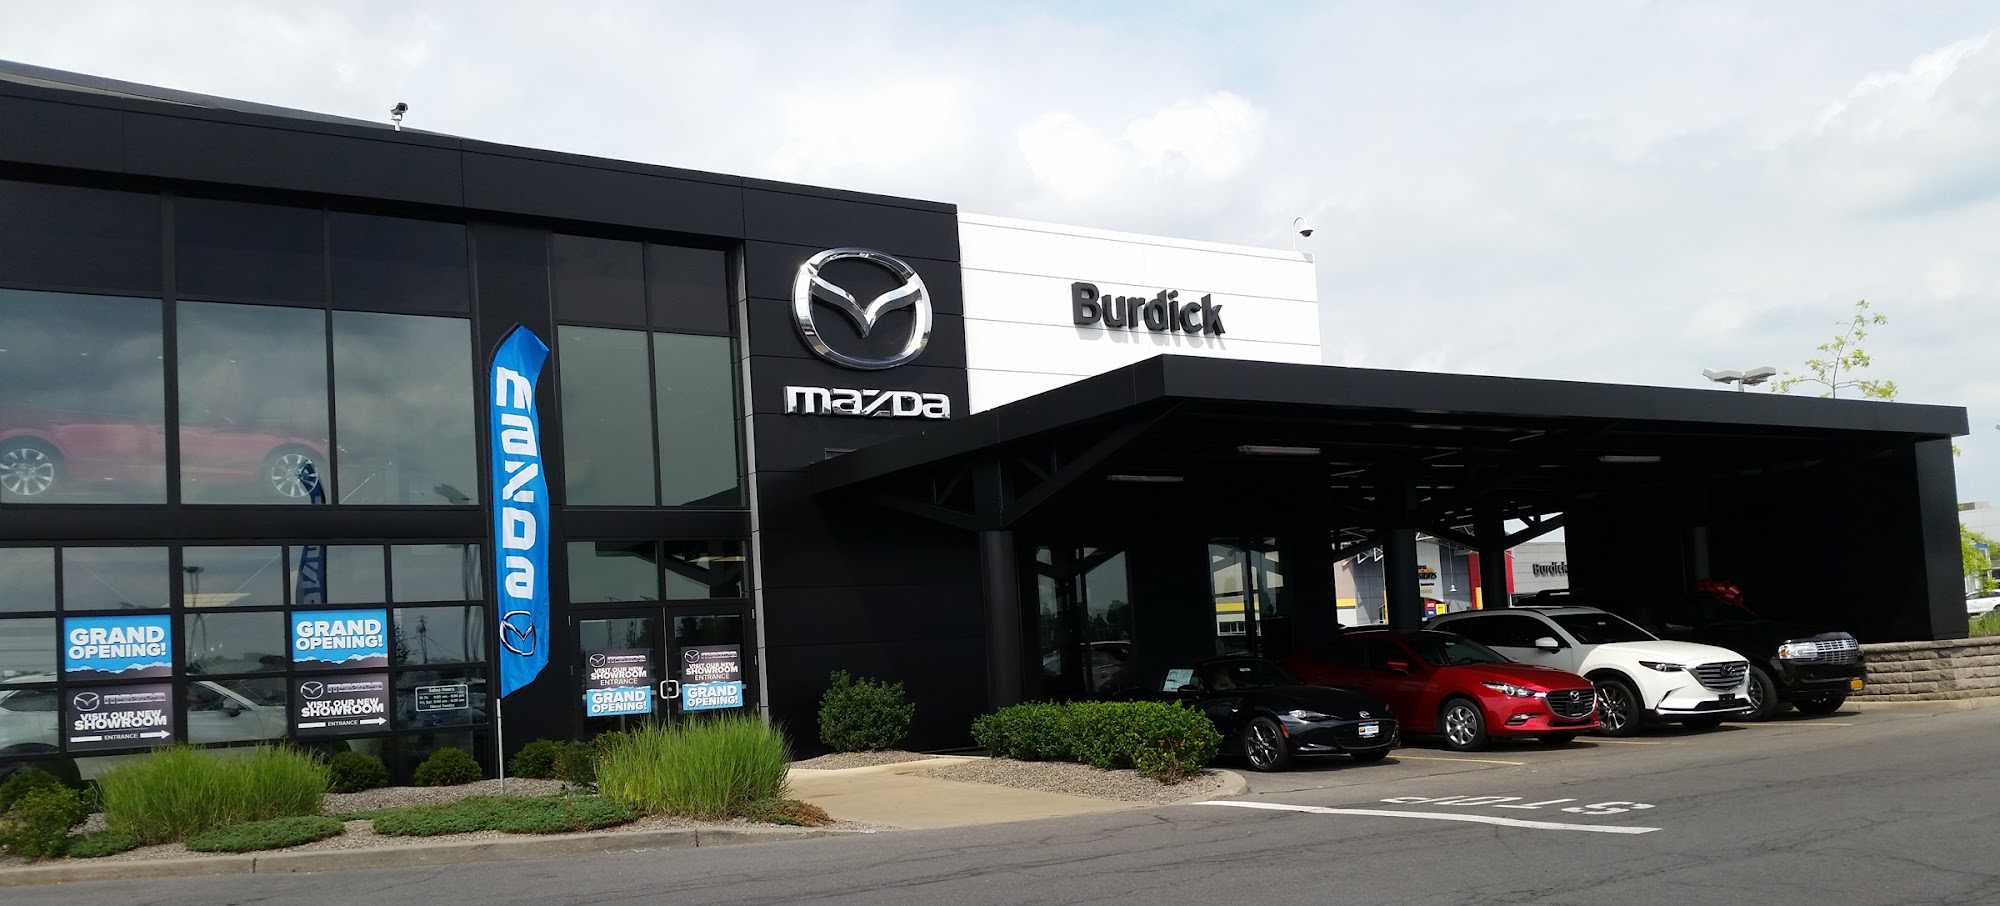 Burdick Mazda